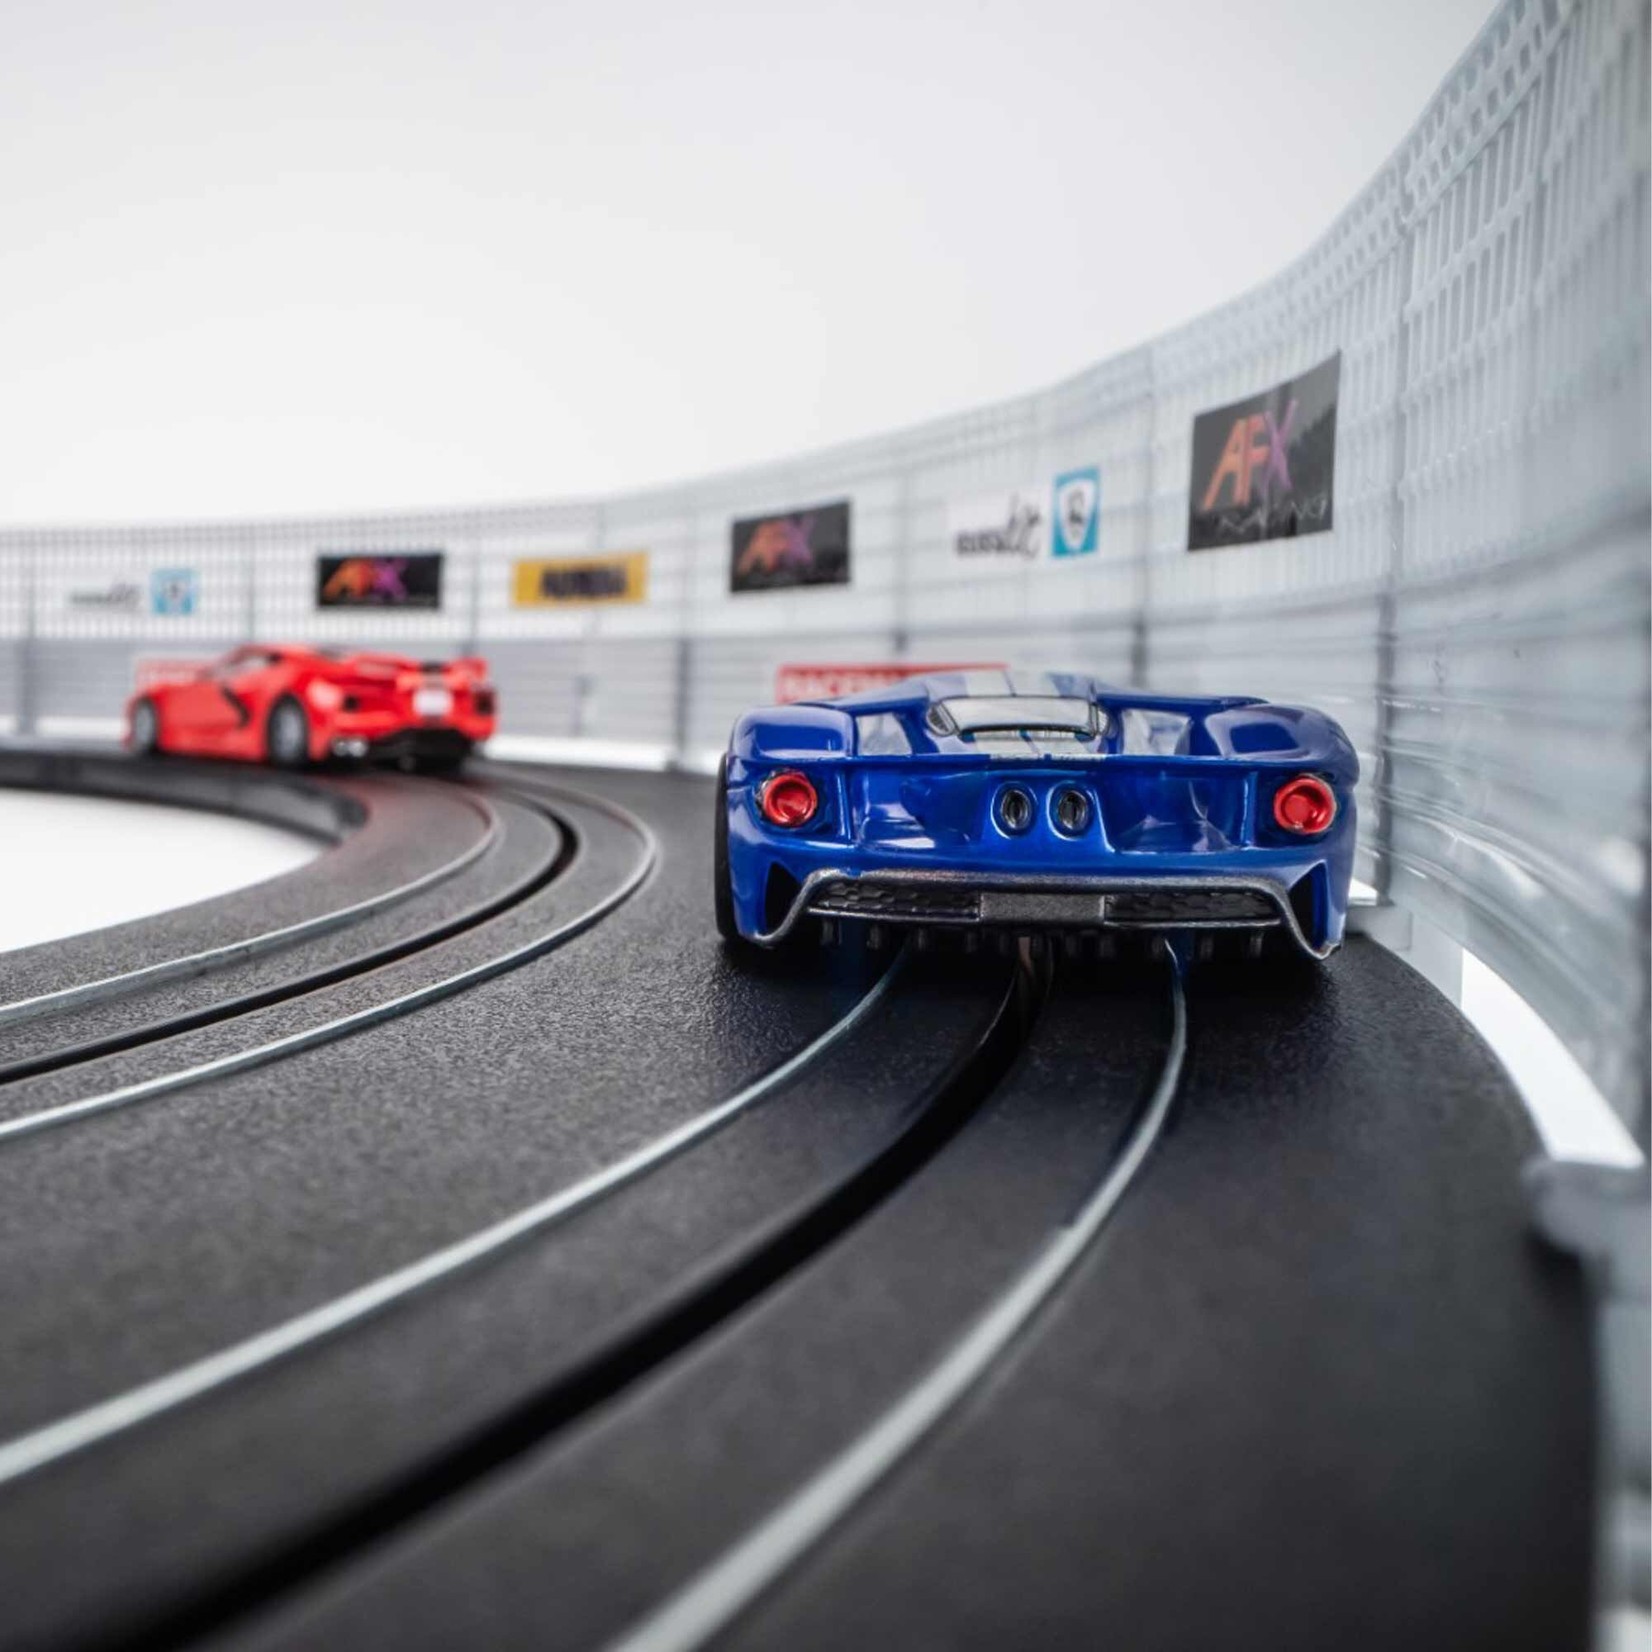 AFX Slot Cars Super Cars 15-Foot Mega G+ HO Slot Car Track Set